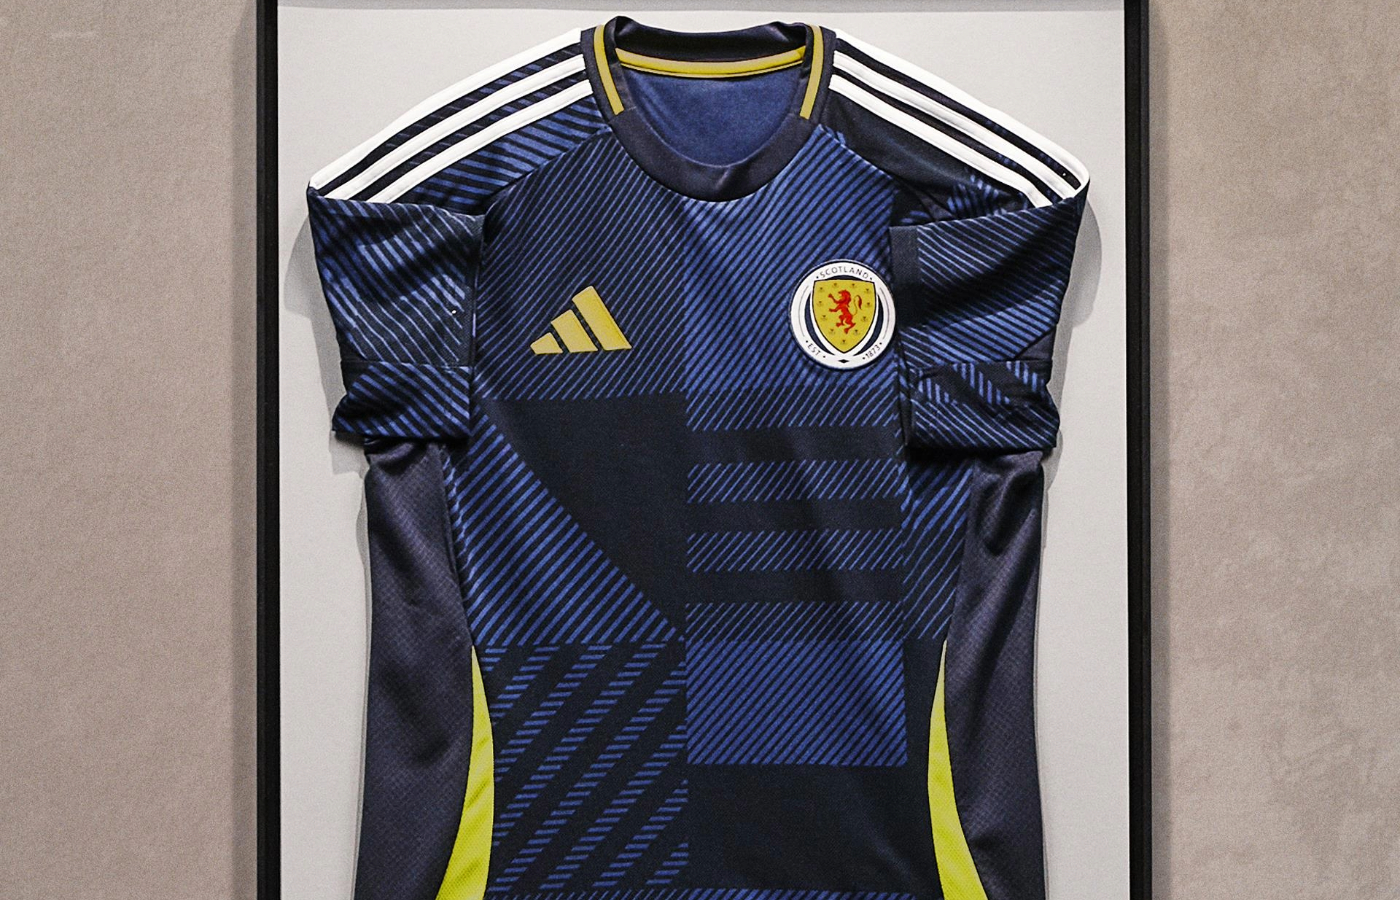 The Scotland home kit features tartan patterns.